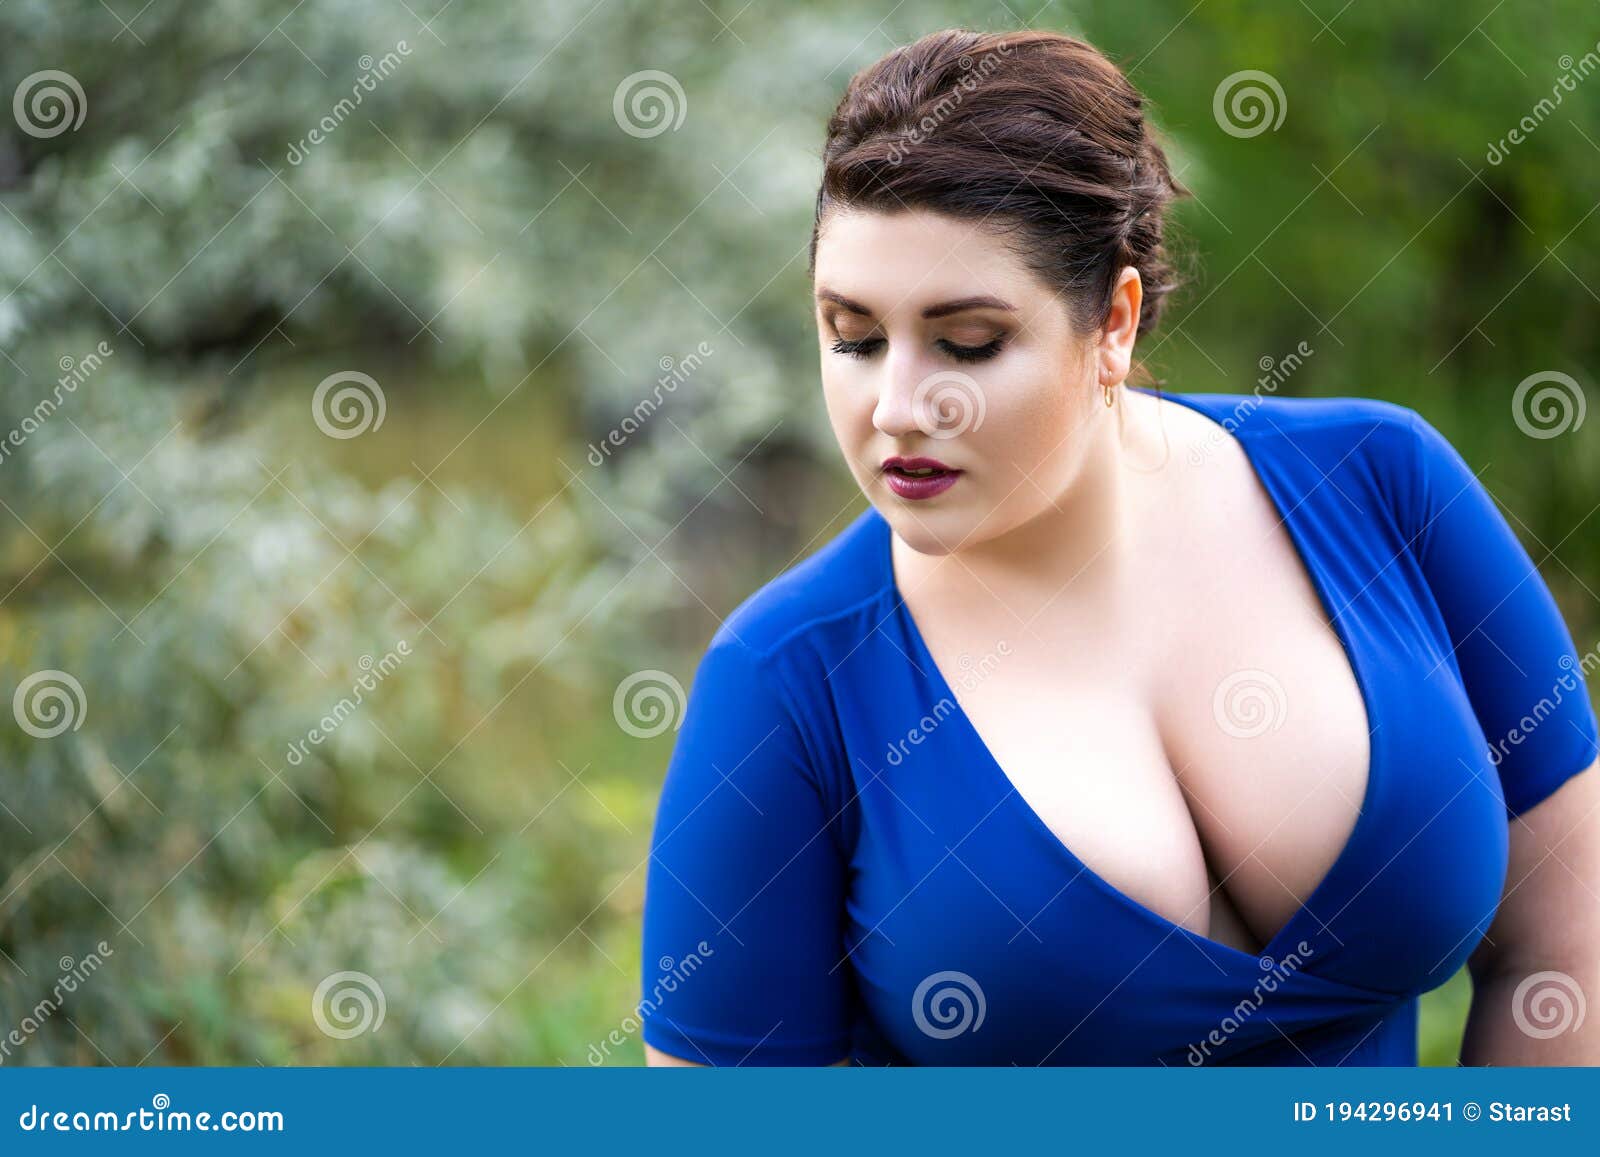 Beautiful Women With Big Breasts